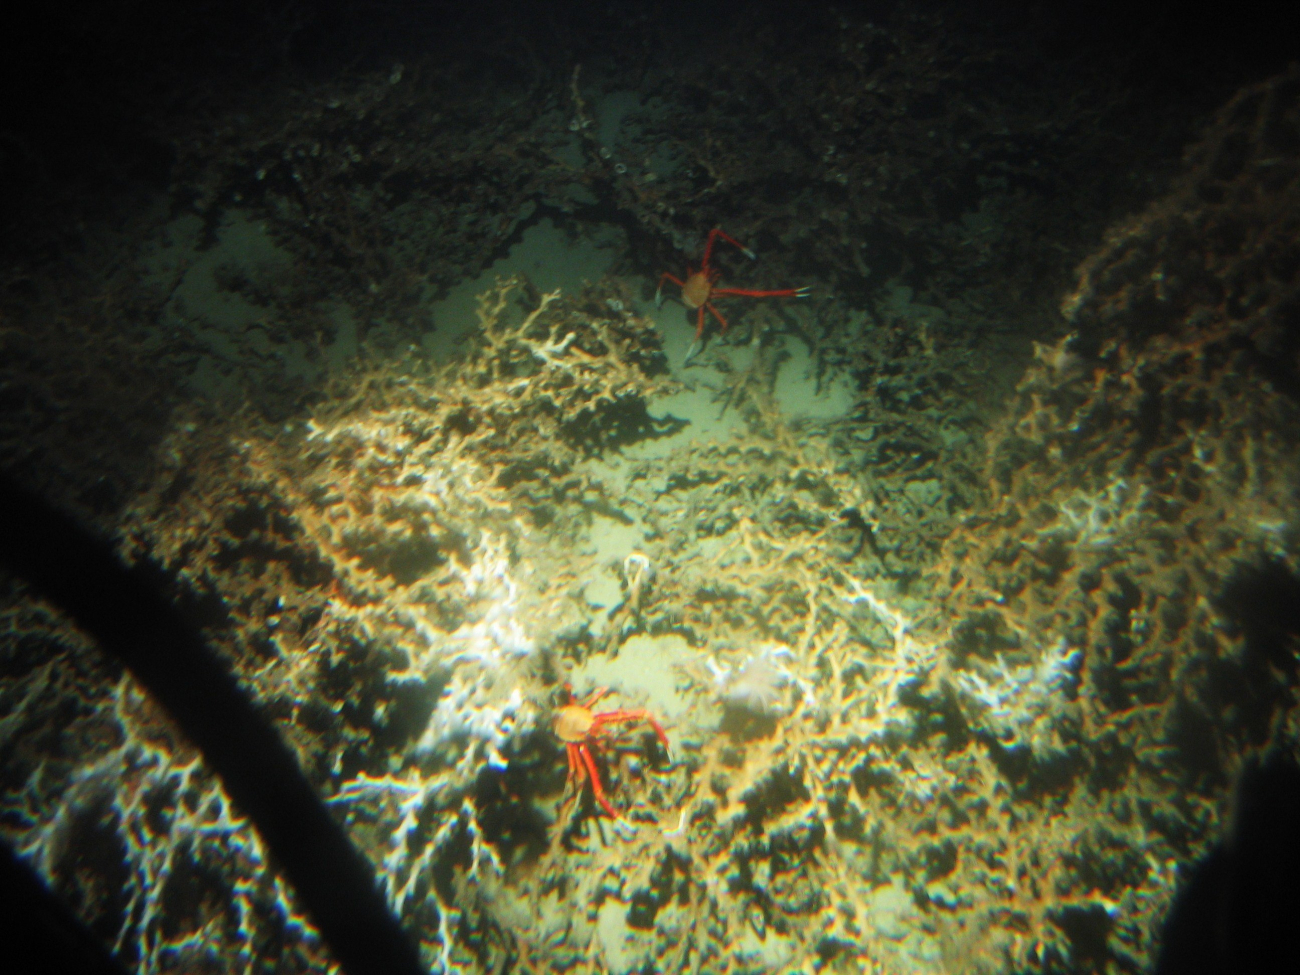 Lophelia coral with Galatheid crabs